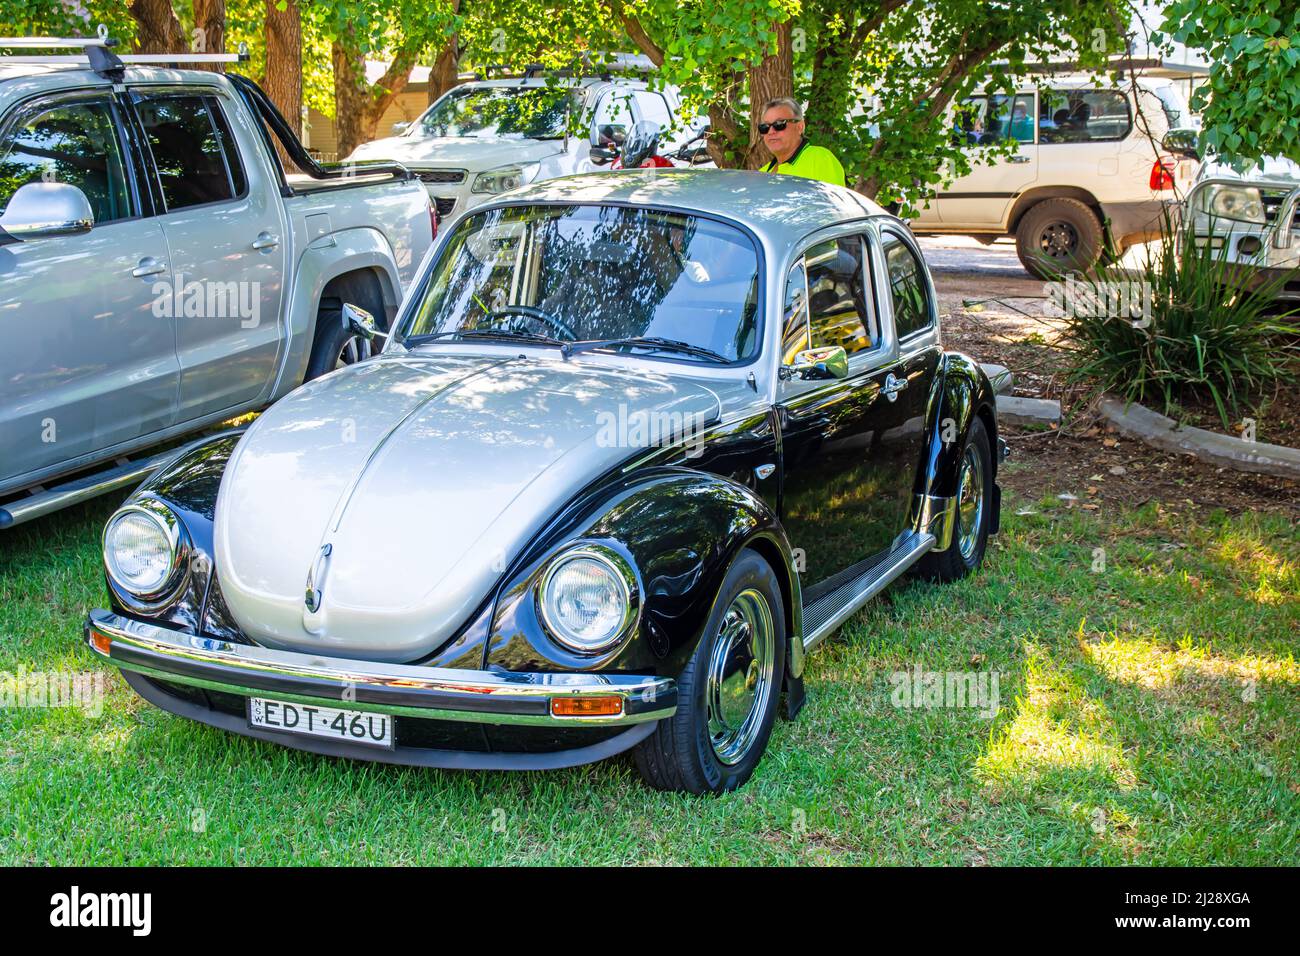 A Black and Silver Volkswagon Beetle on display at Tamworth Australia. Stock Photo